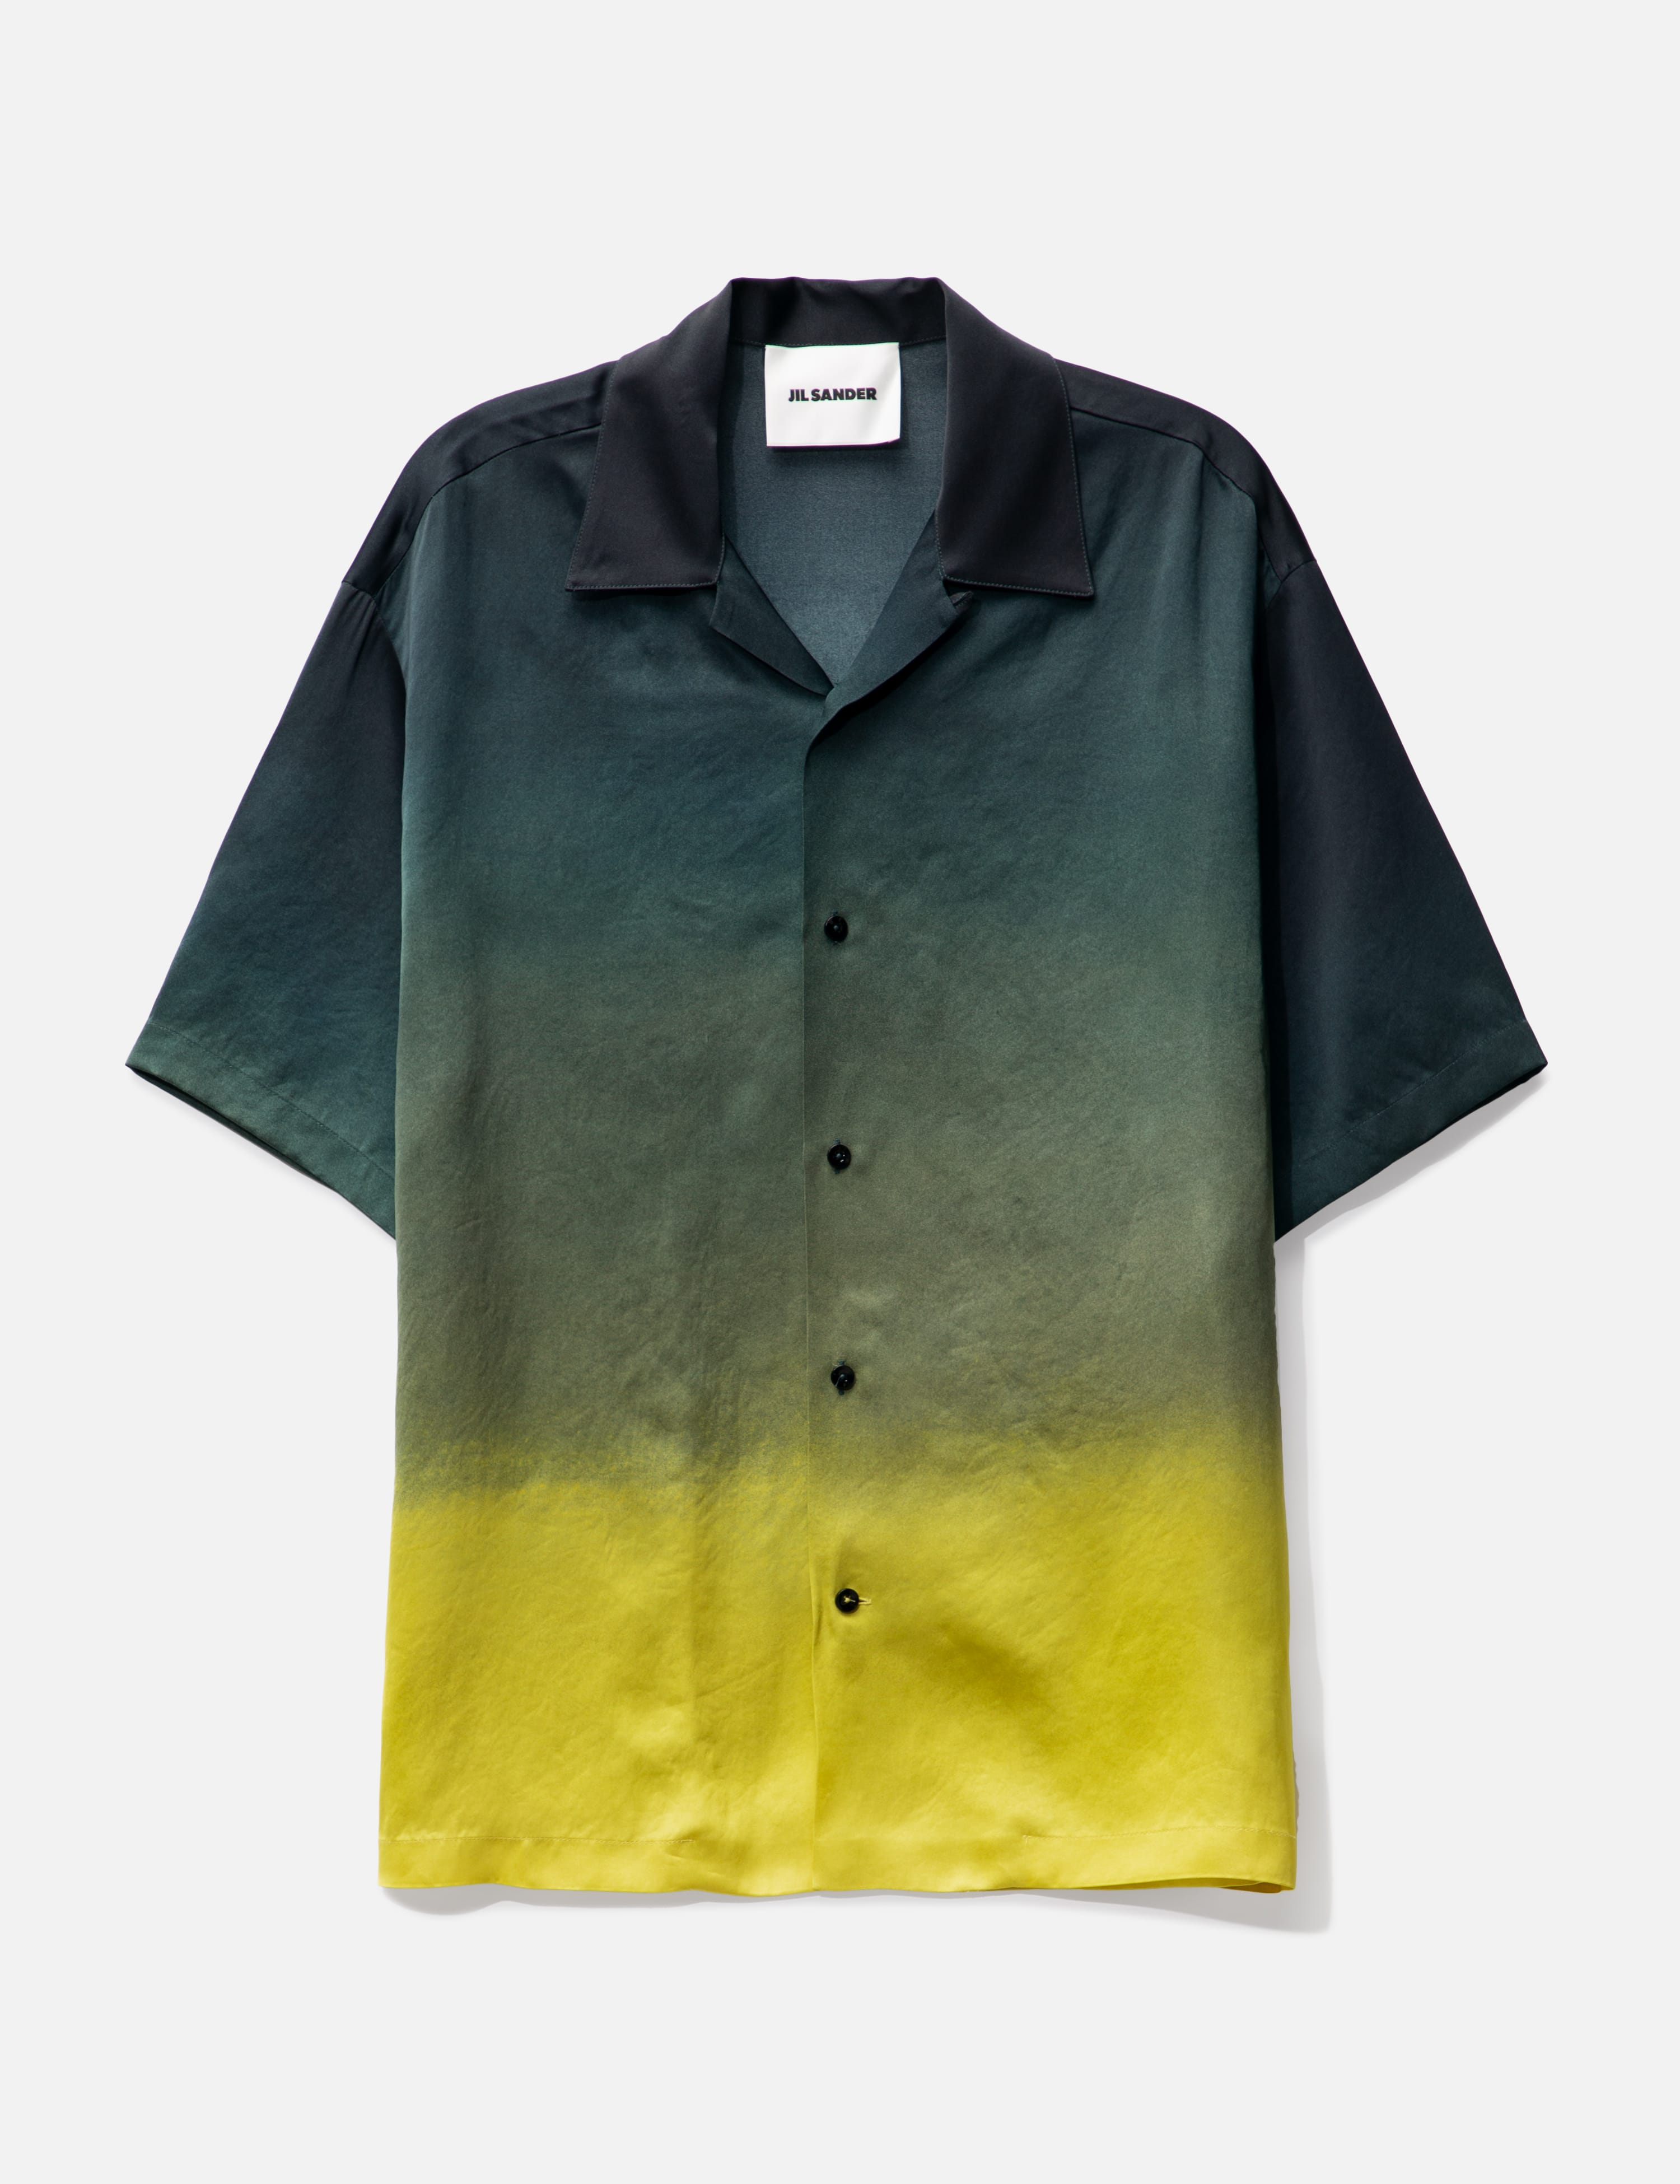 Jil Sander   Viscose Gradient Shirt   HBX   Globally Curated